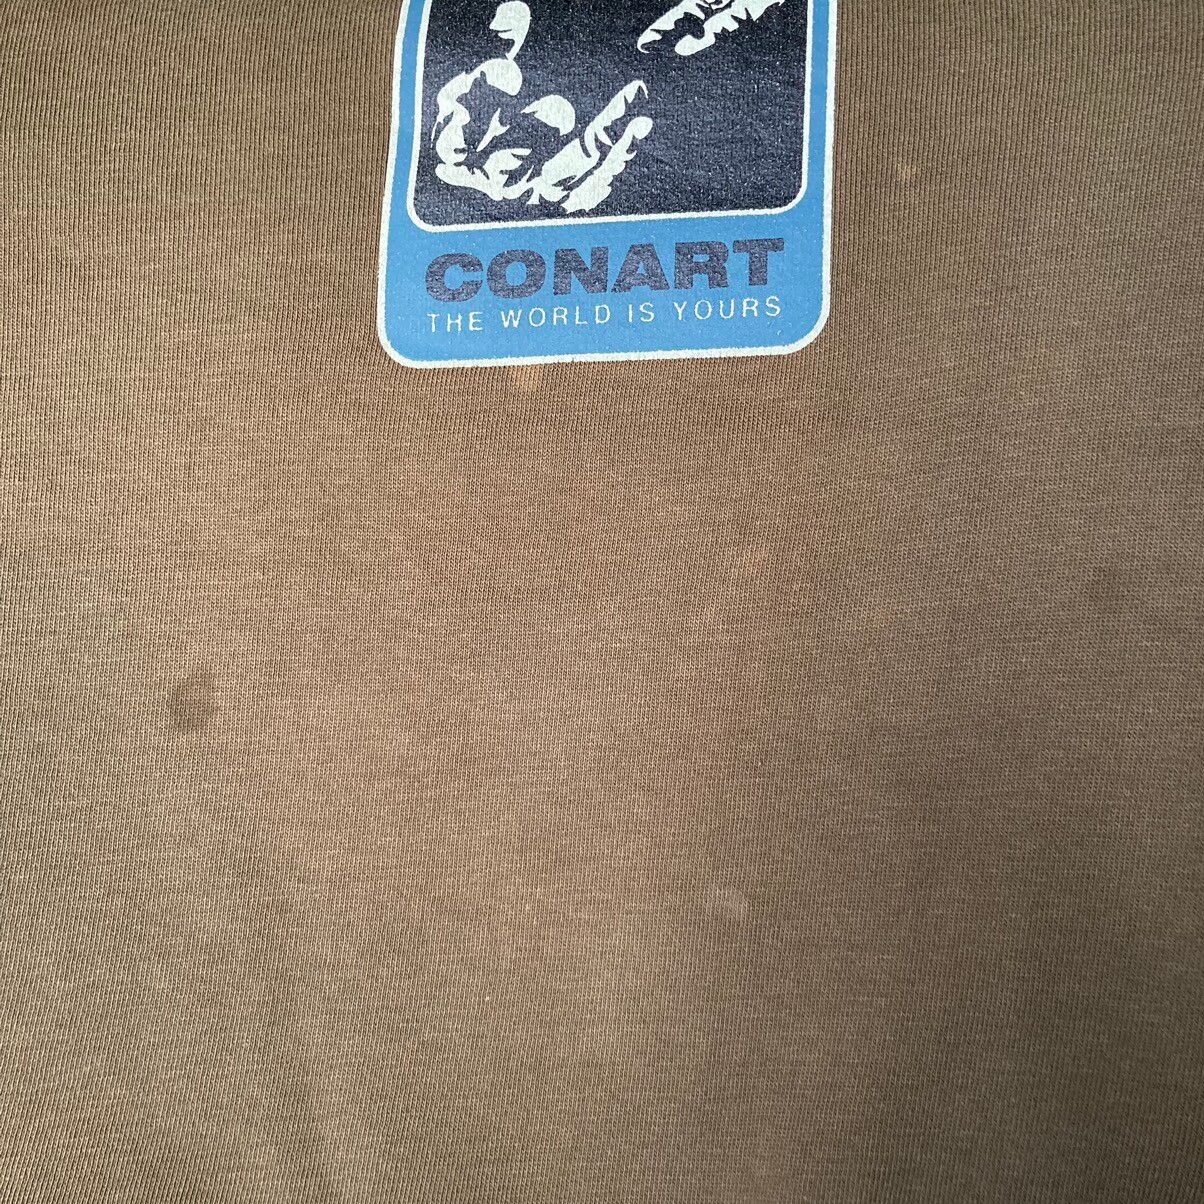 Vintage Conart Sweatshirt Size L - 6